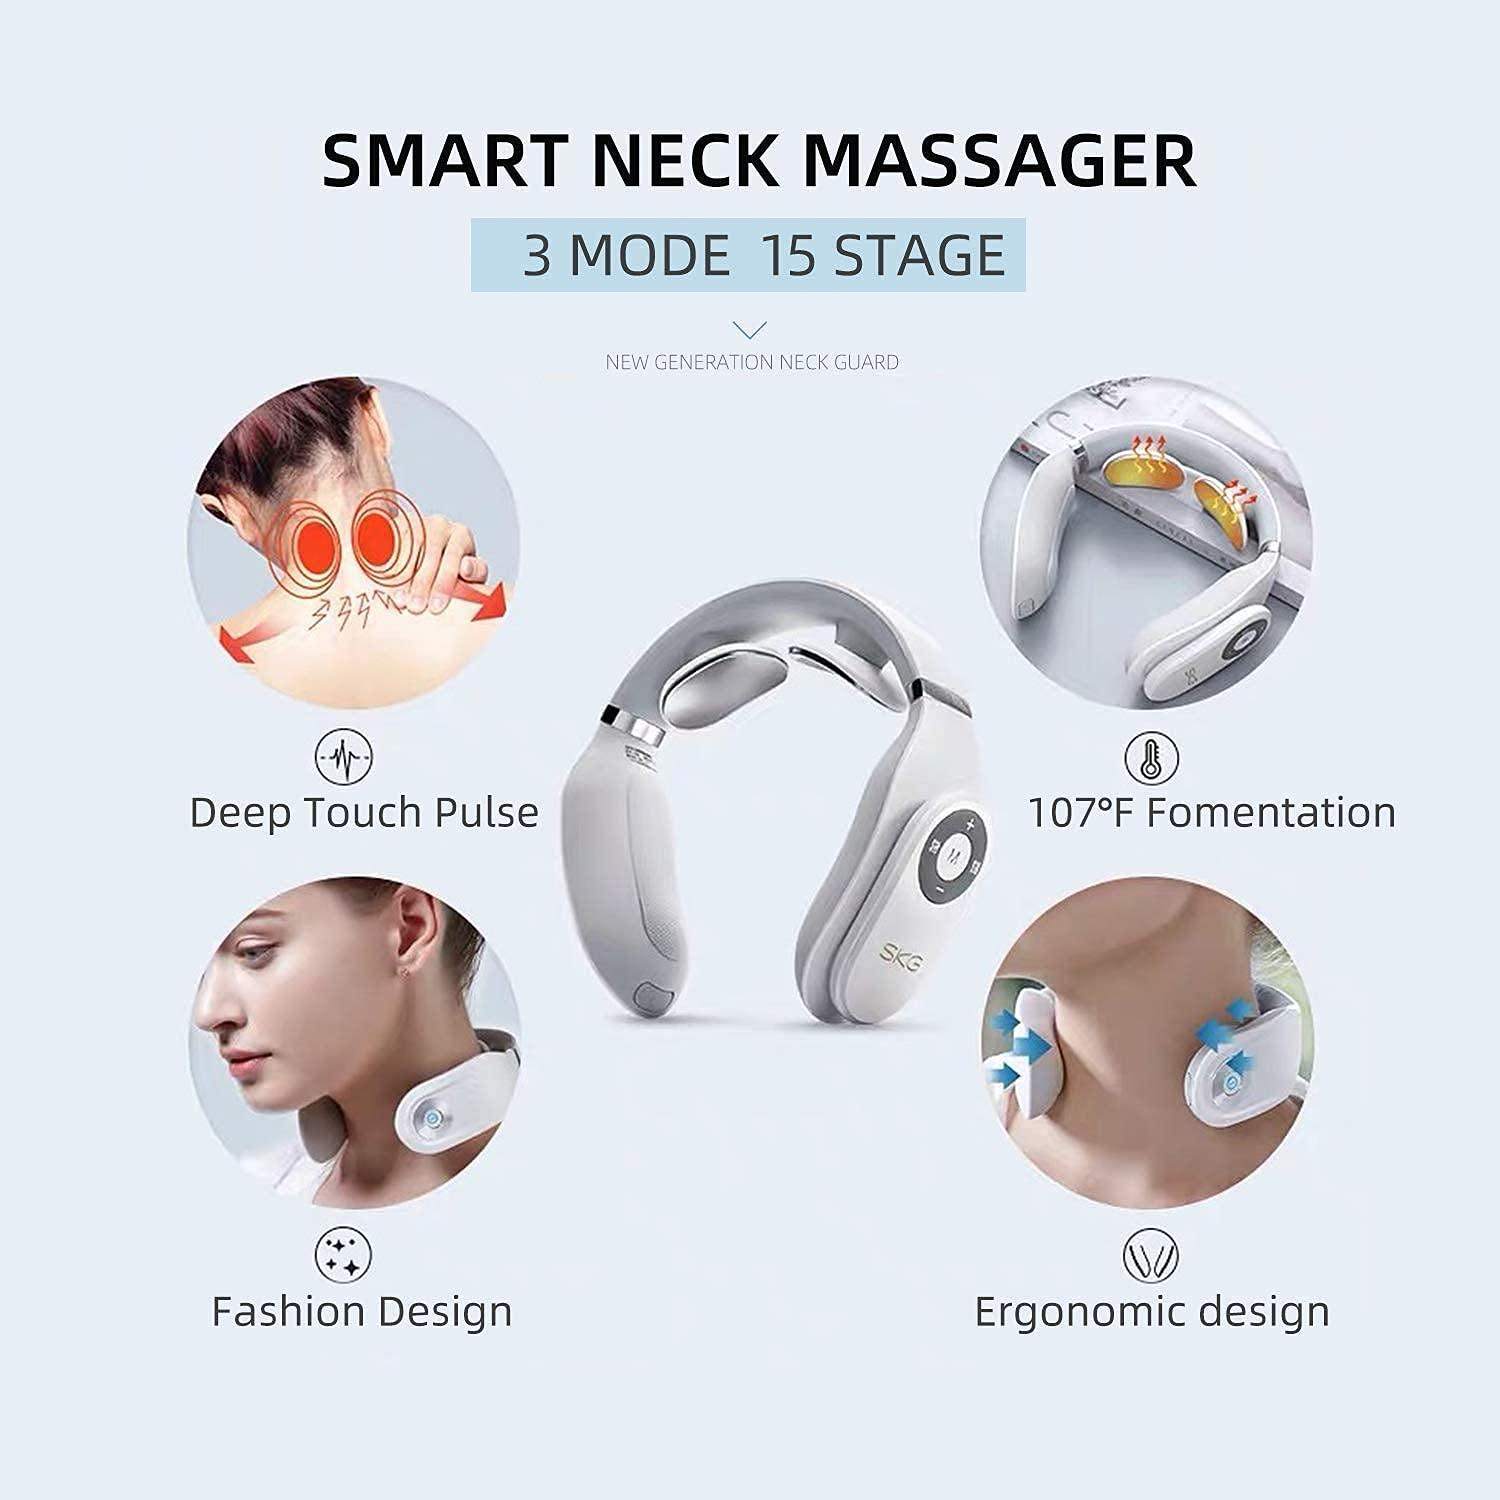 SKG Smart Neck Massager 4098E for Neck Pain Relief